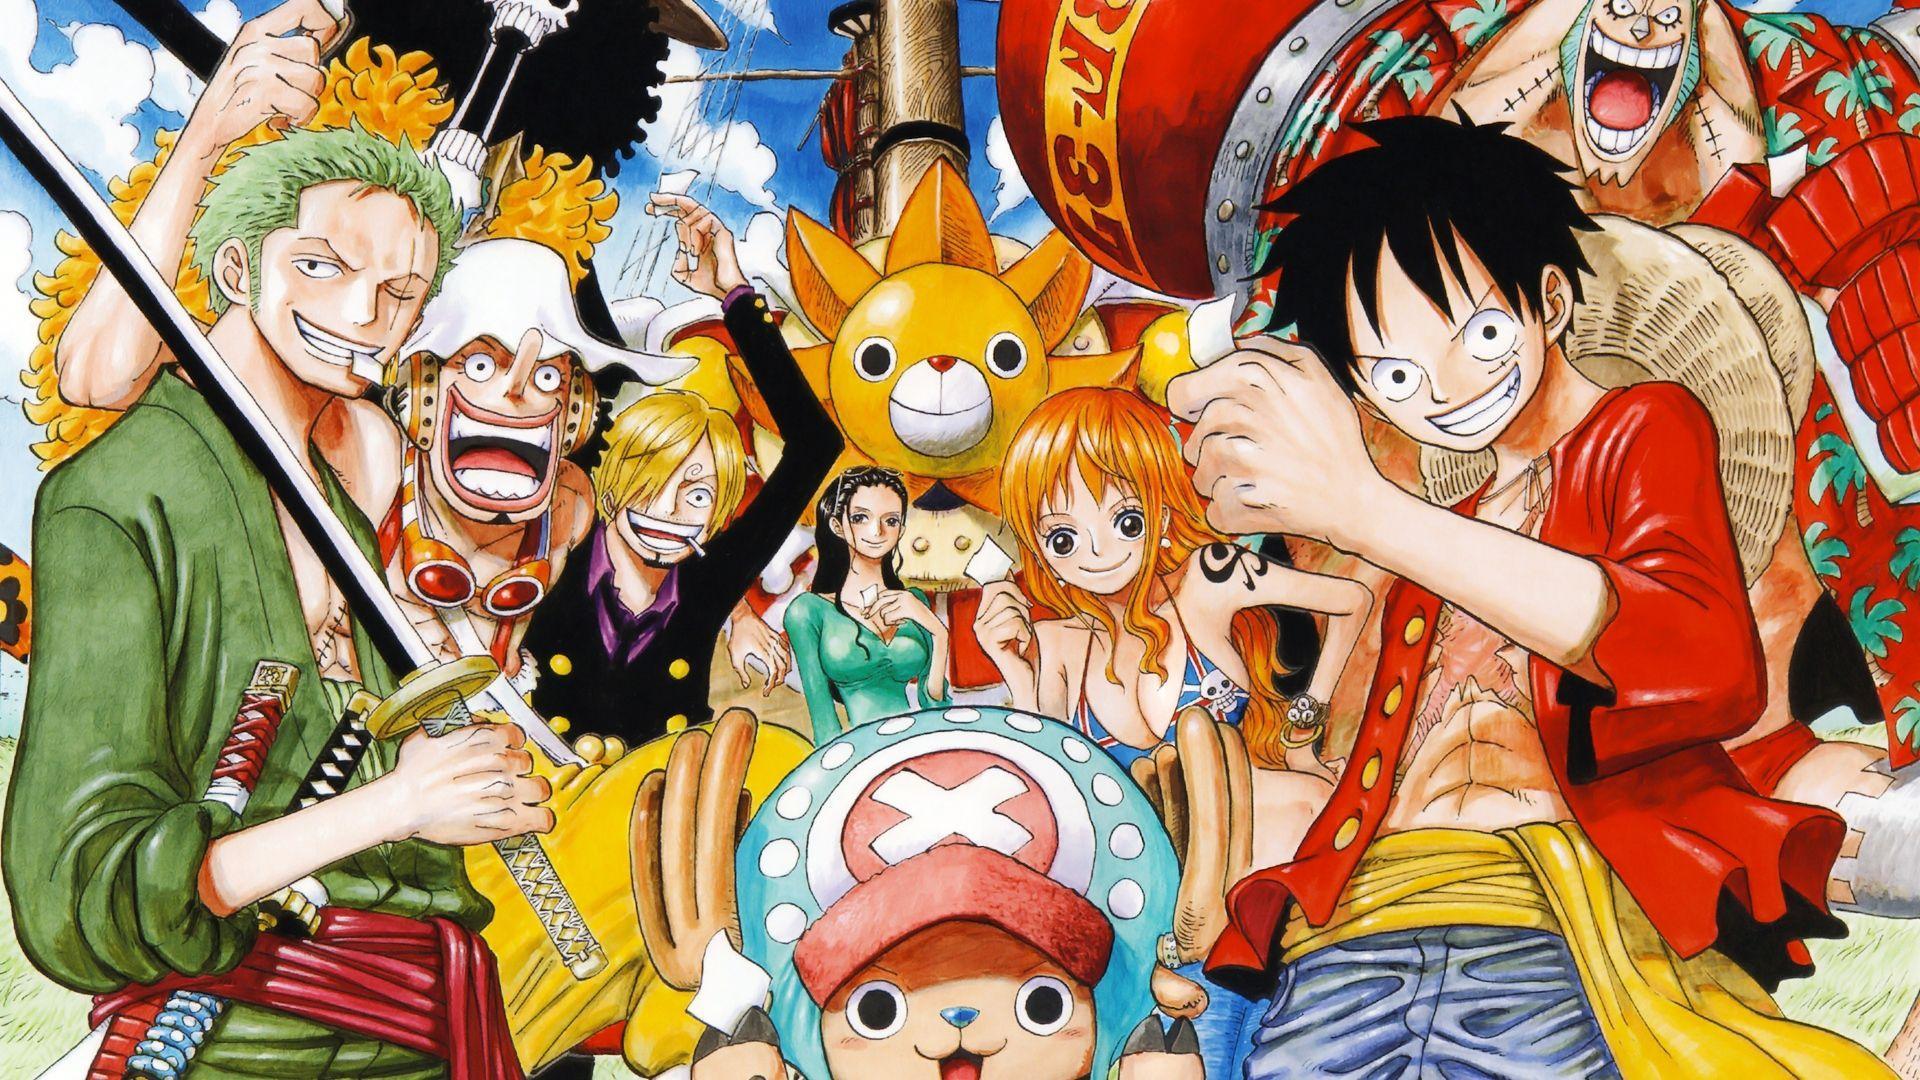 Manga One Piece 1920x1080 Wallpapers Top Free Manga One Piece 1920x1080 Backgrounds Wallpaperaccess